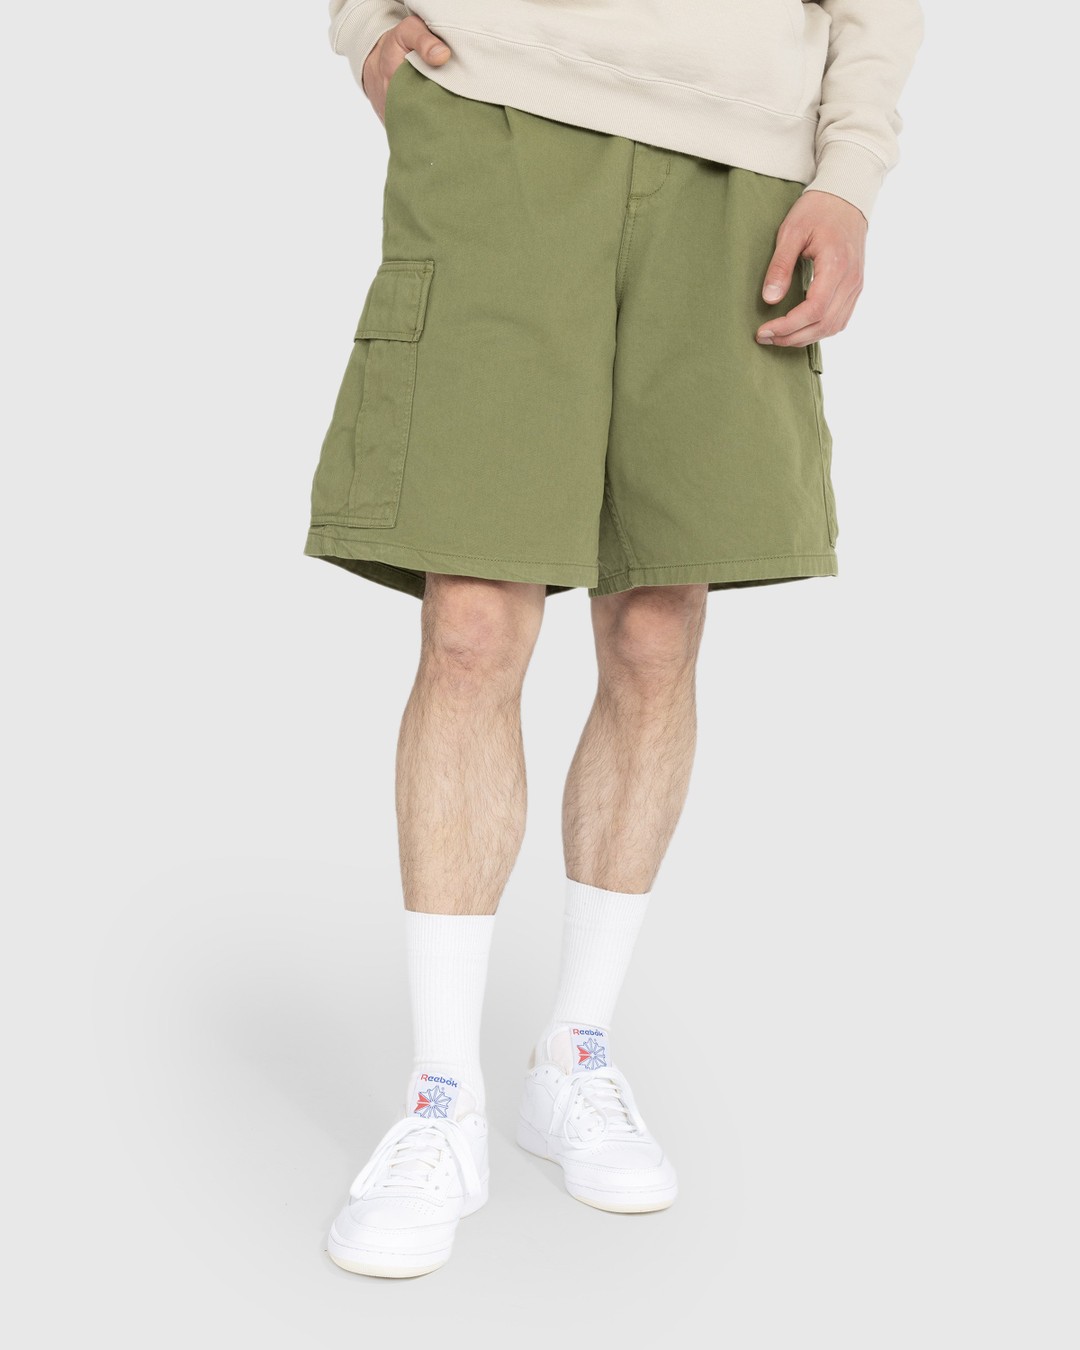 Carhartt WIP – Cole Cargo Short Green - Shorts - Green - Image 2